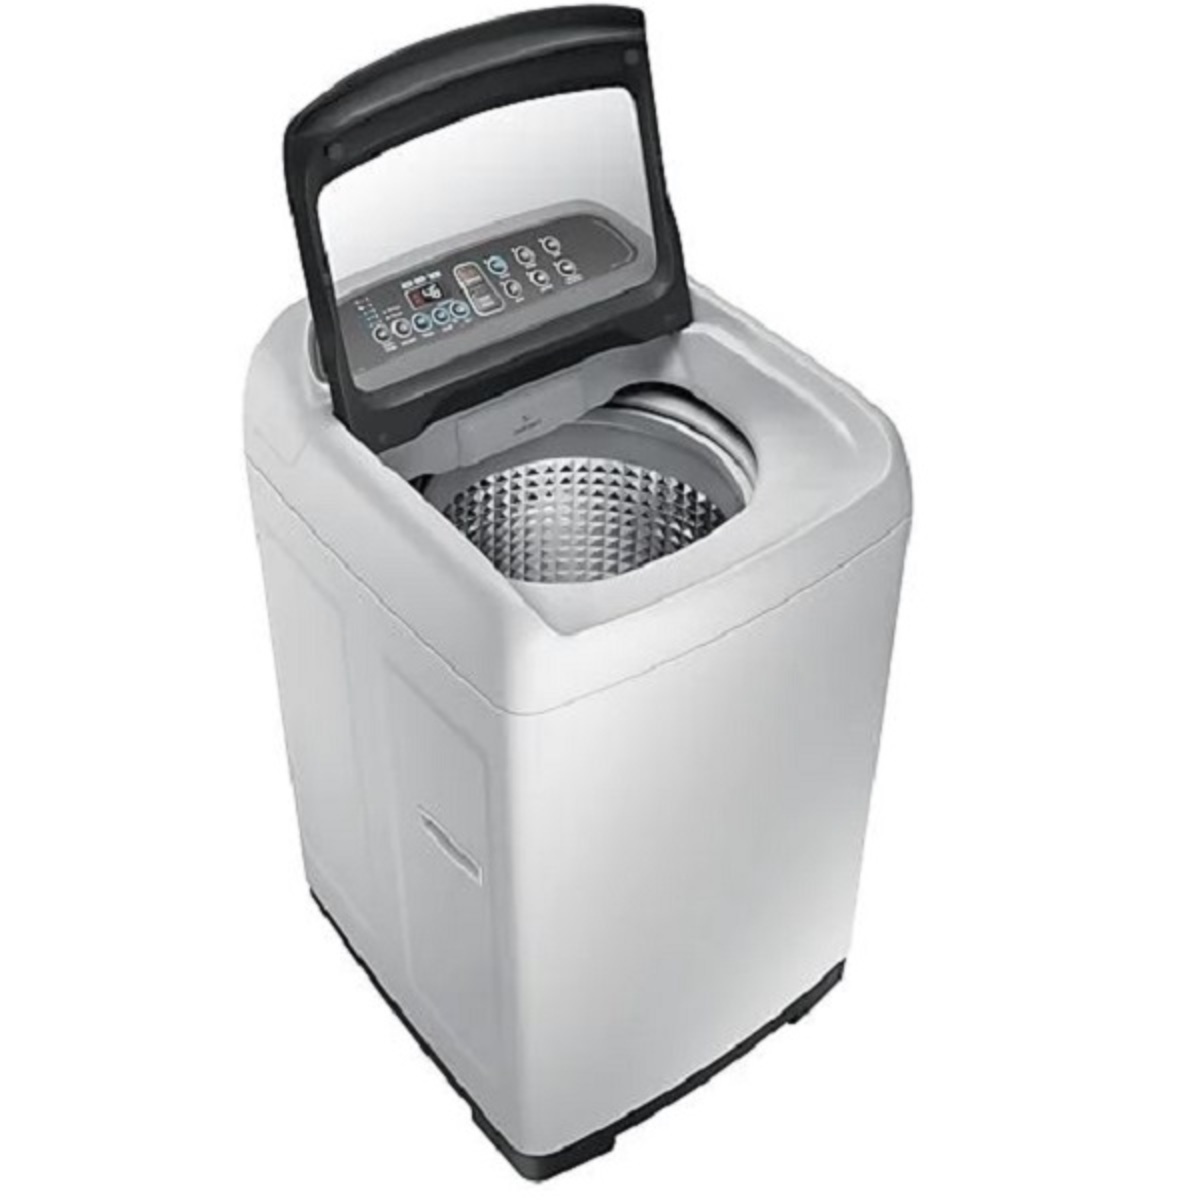 Samsung Washing Machine WA65M4205HV 6.5kg